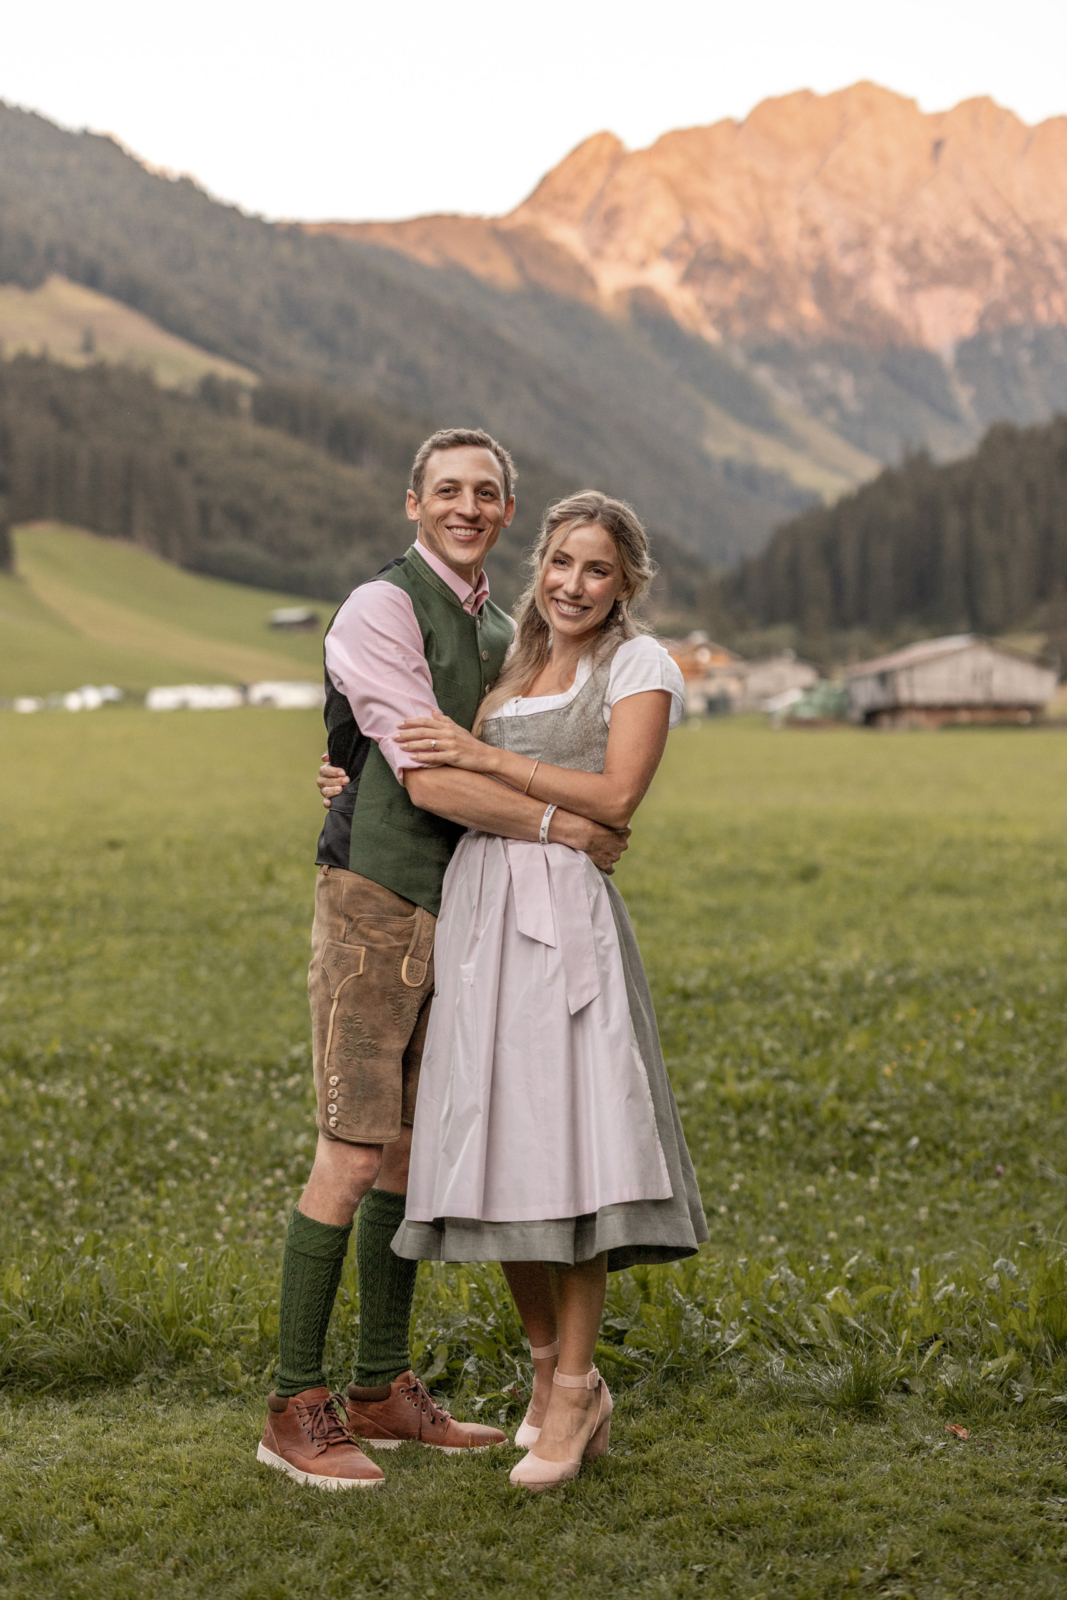 traditional Austrian Dirndl and Lederhosen for the Get Together for the destination wedding in Austria